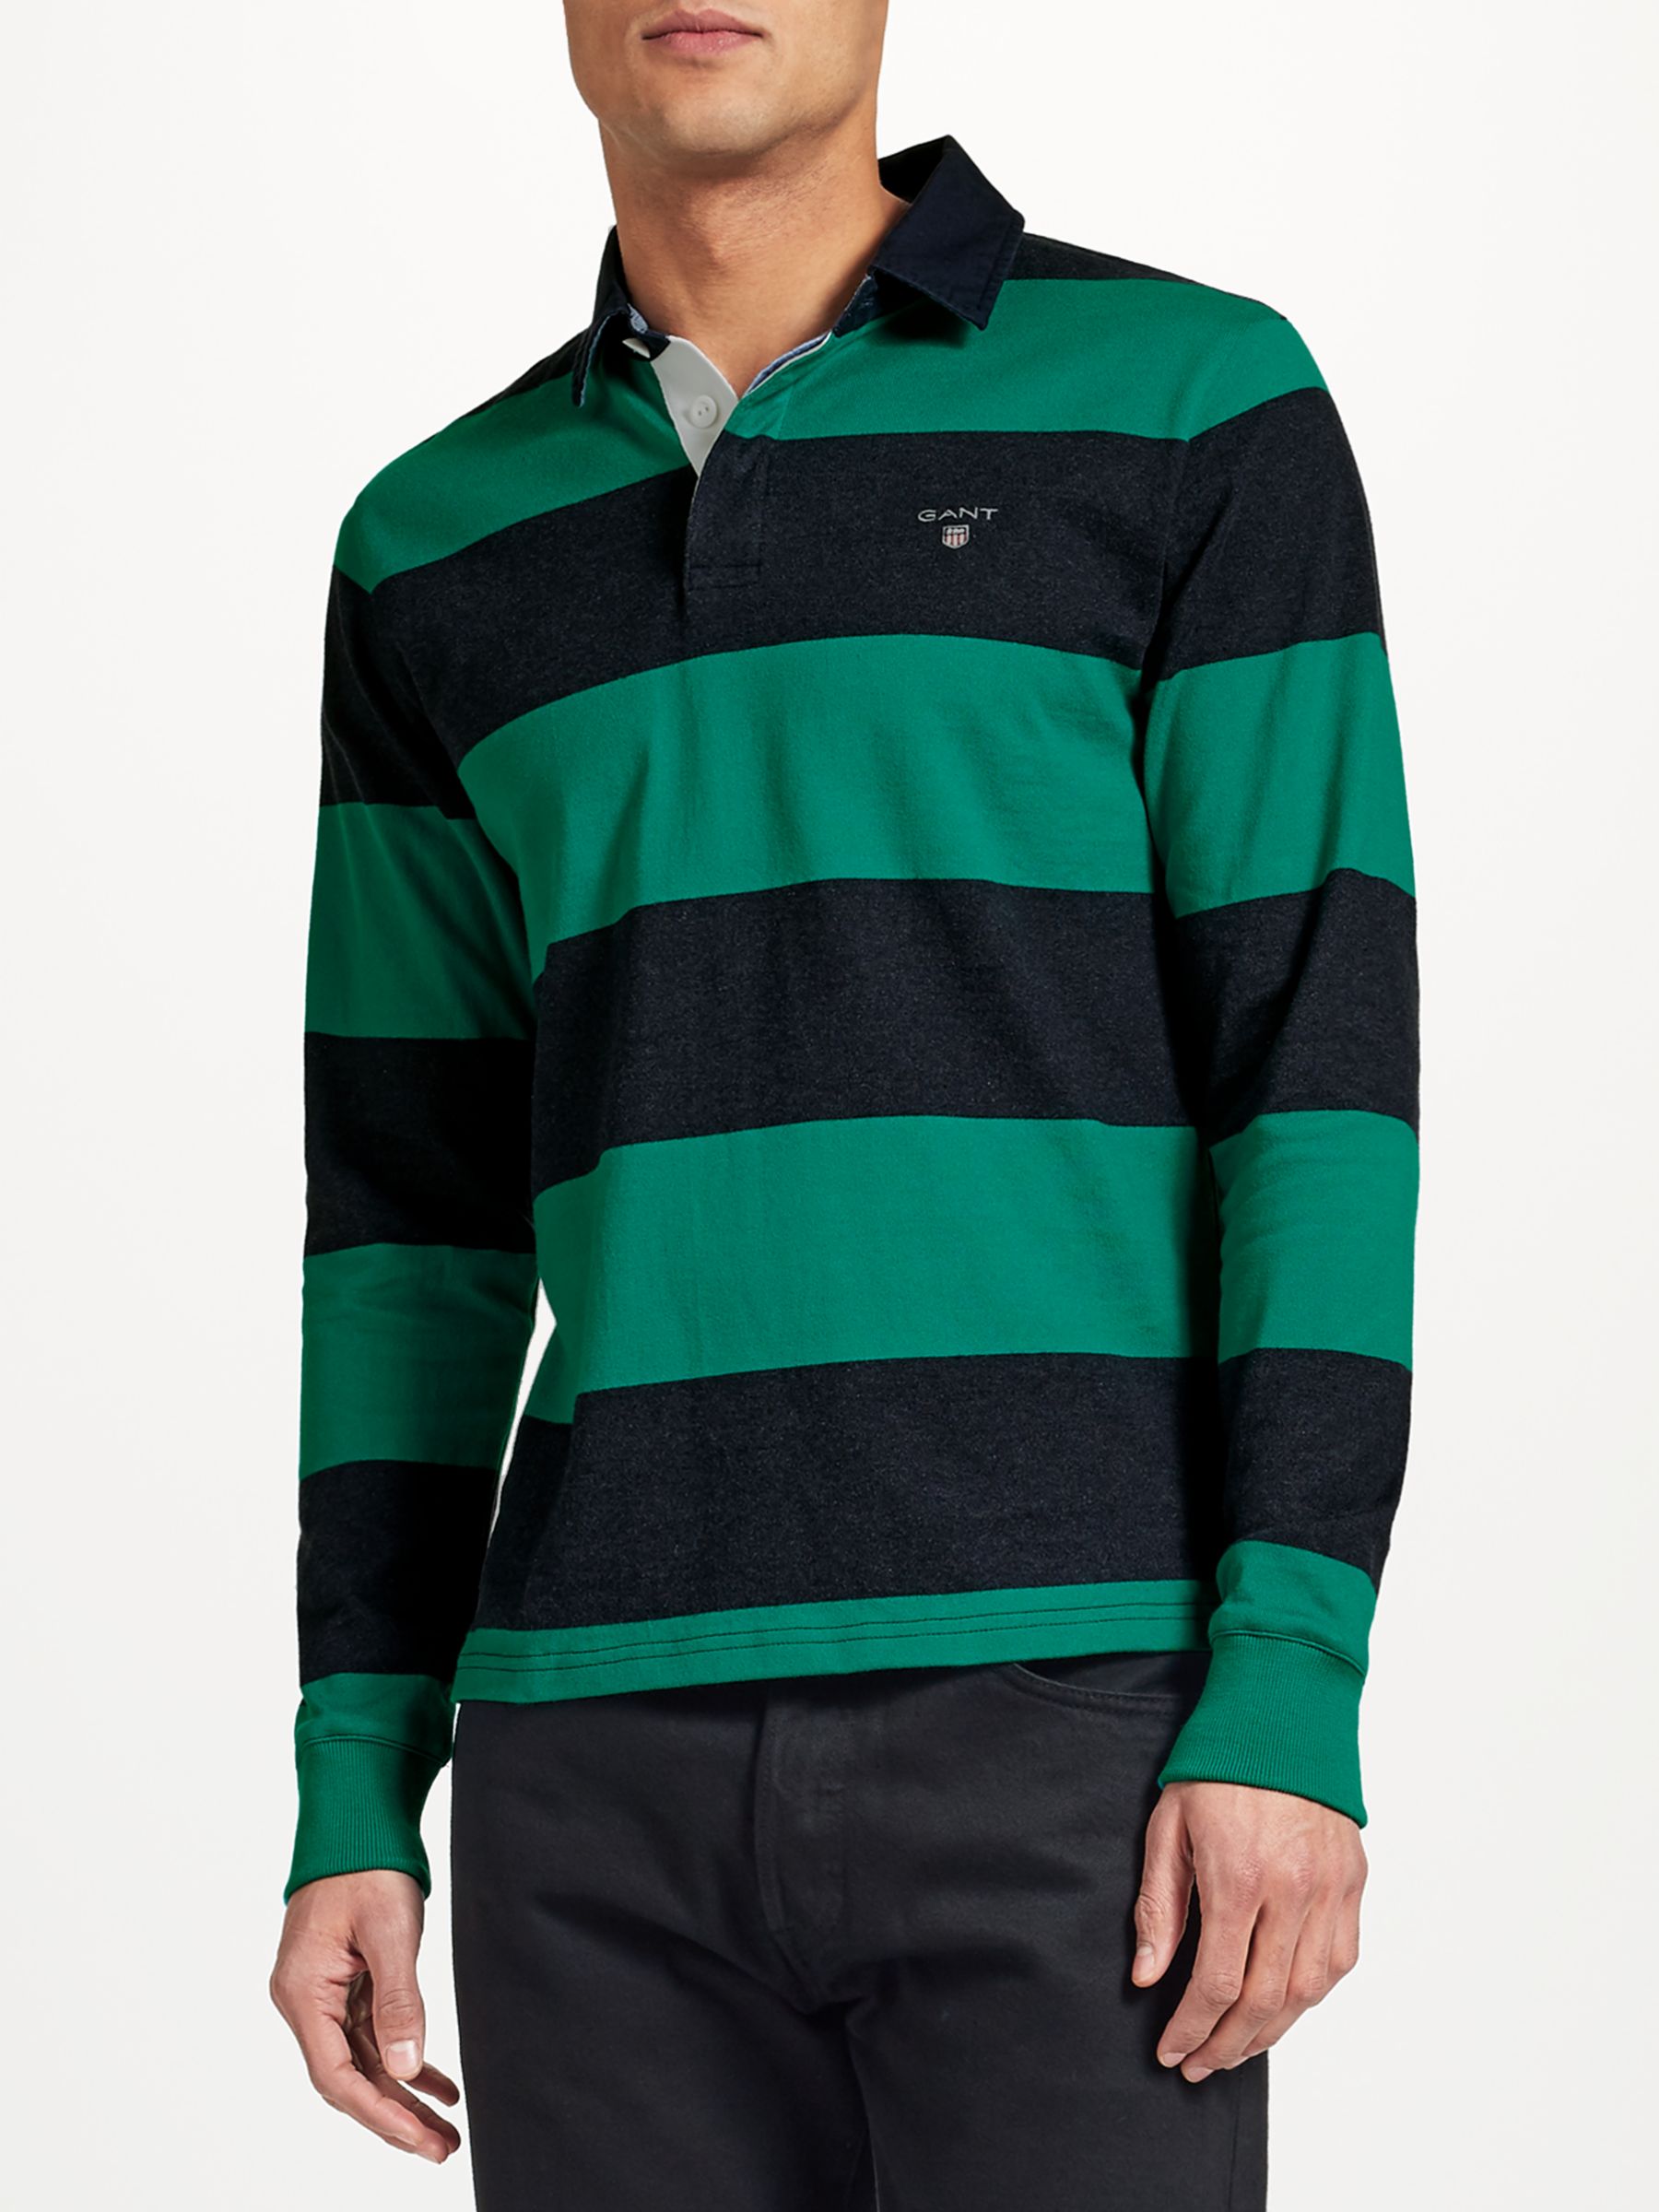 GANT Rugger Bar Stripe Heavy Jersey Rugby Shirt, Emerald Green, XXL